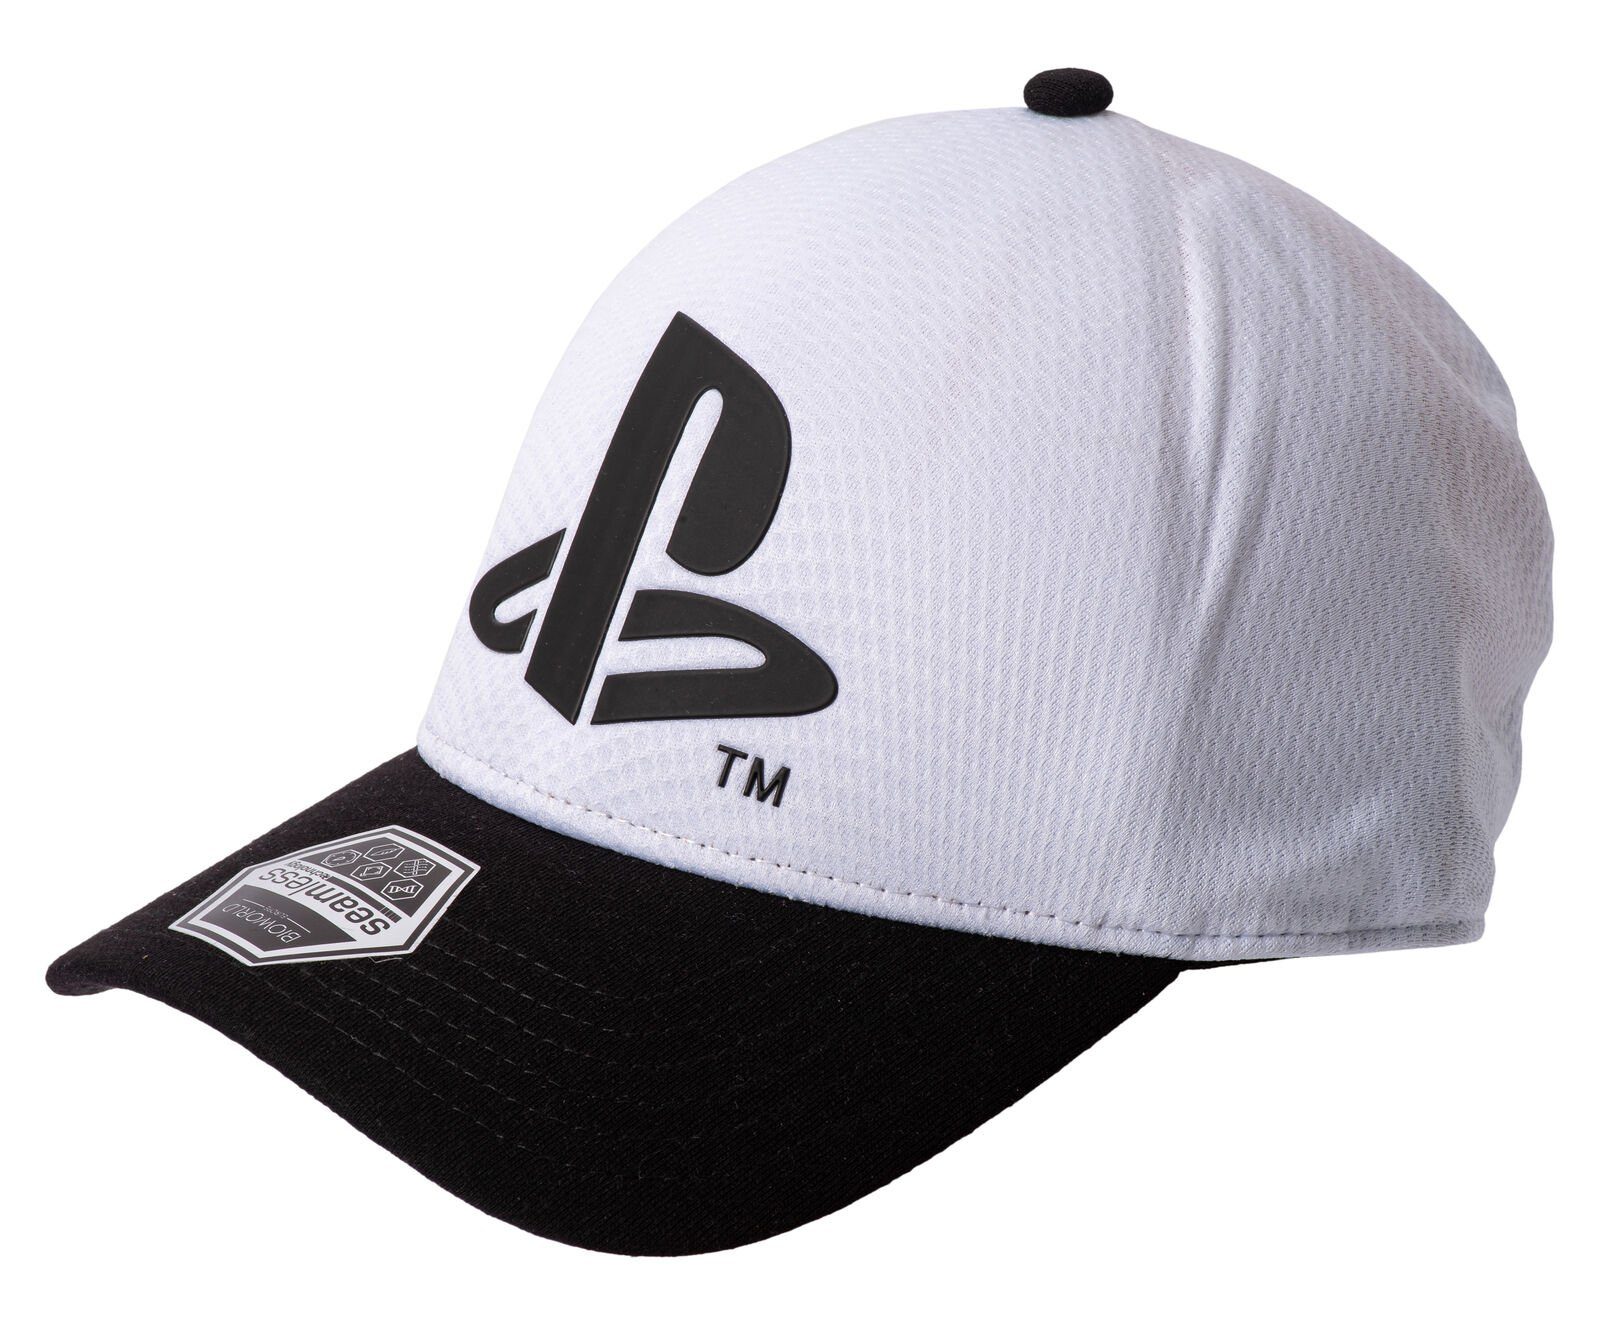 Playstation Baseball Cap PLAYSTATION - Cappy PS4 Baseballcap weiß PS5 Schirmmütze schwarz Gaming